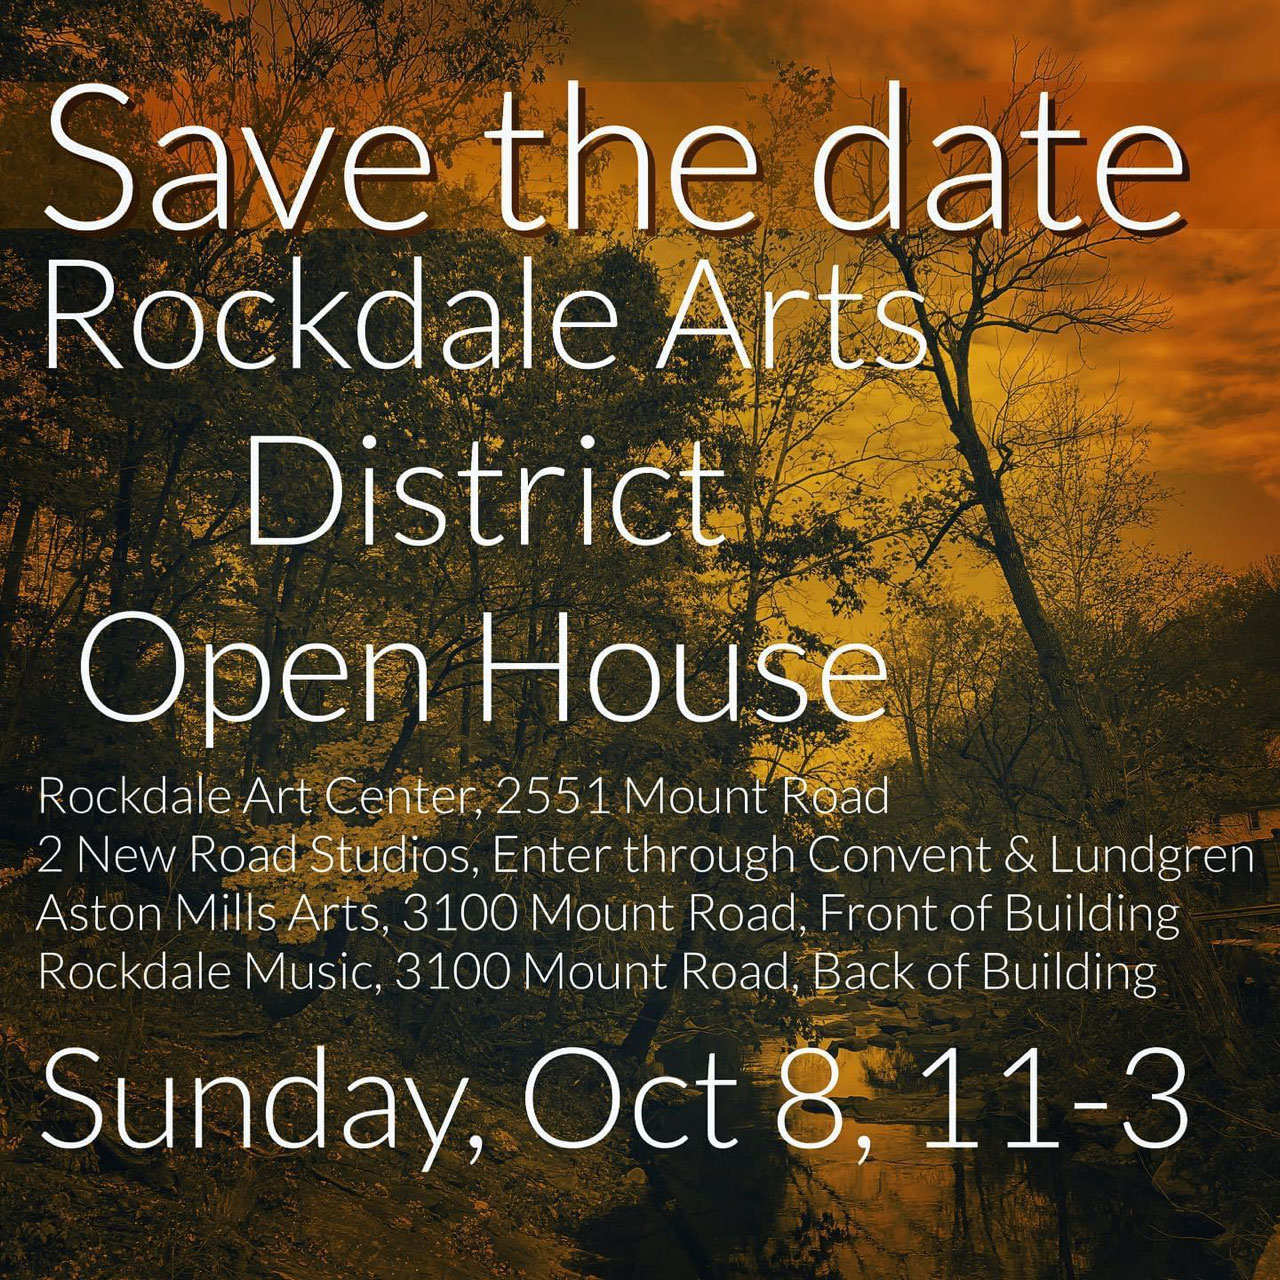 Rockdale Arts District Open House